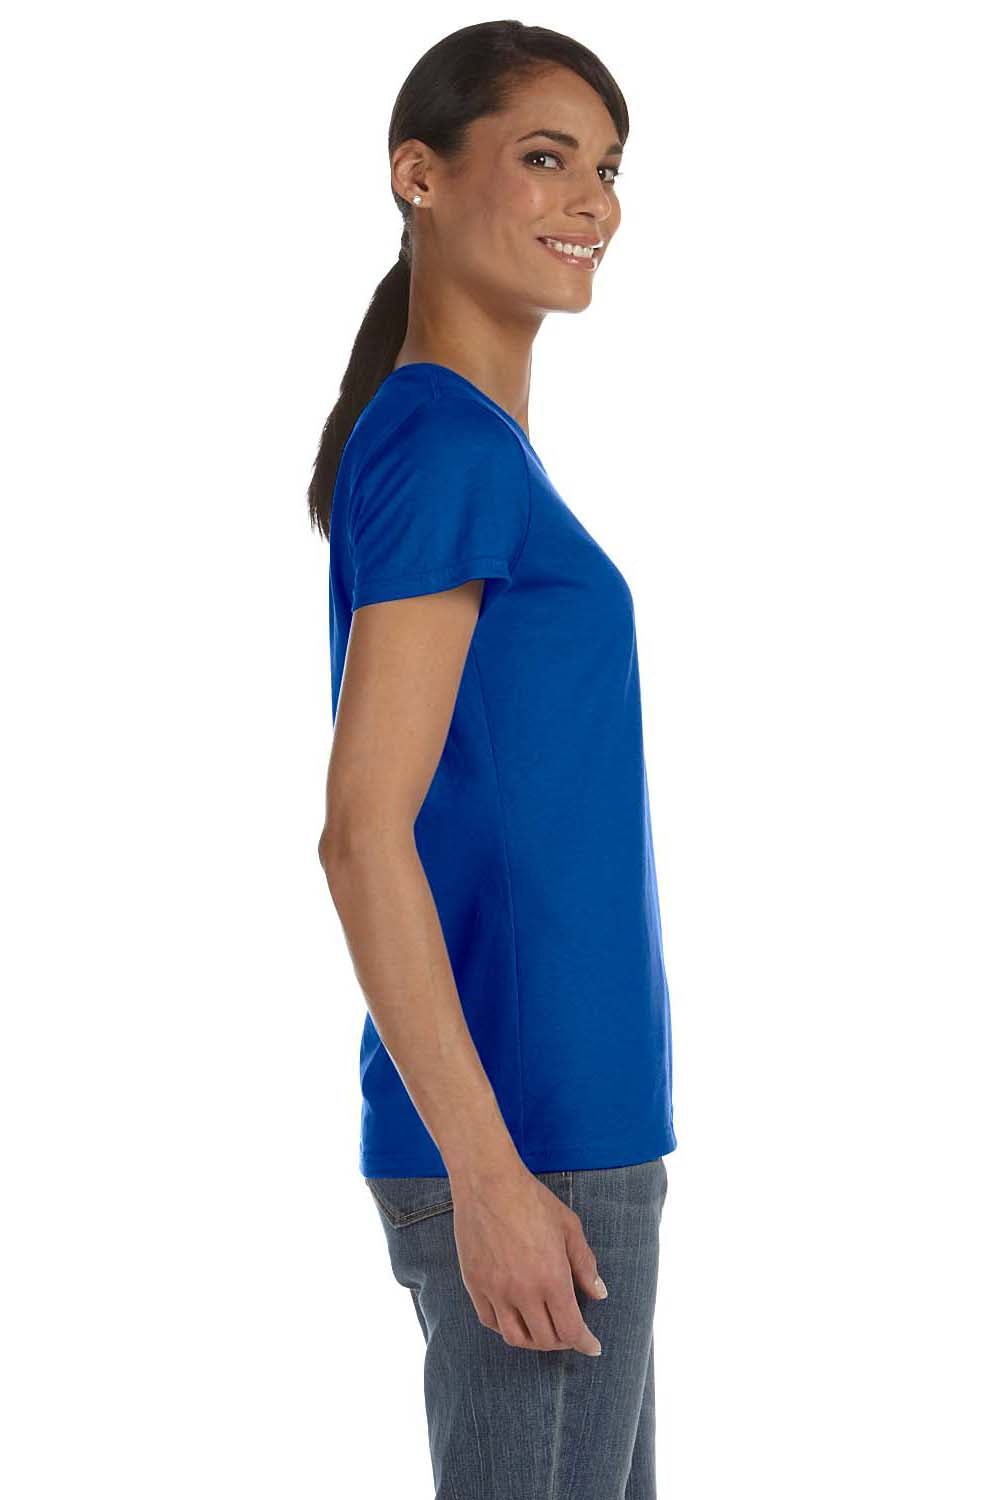 Fruit Of The Loom L3930R Womens HD Jersey Short Sleeve Crewneck T-Shirt Royal Blue Side